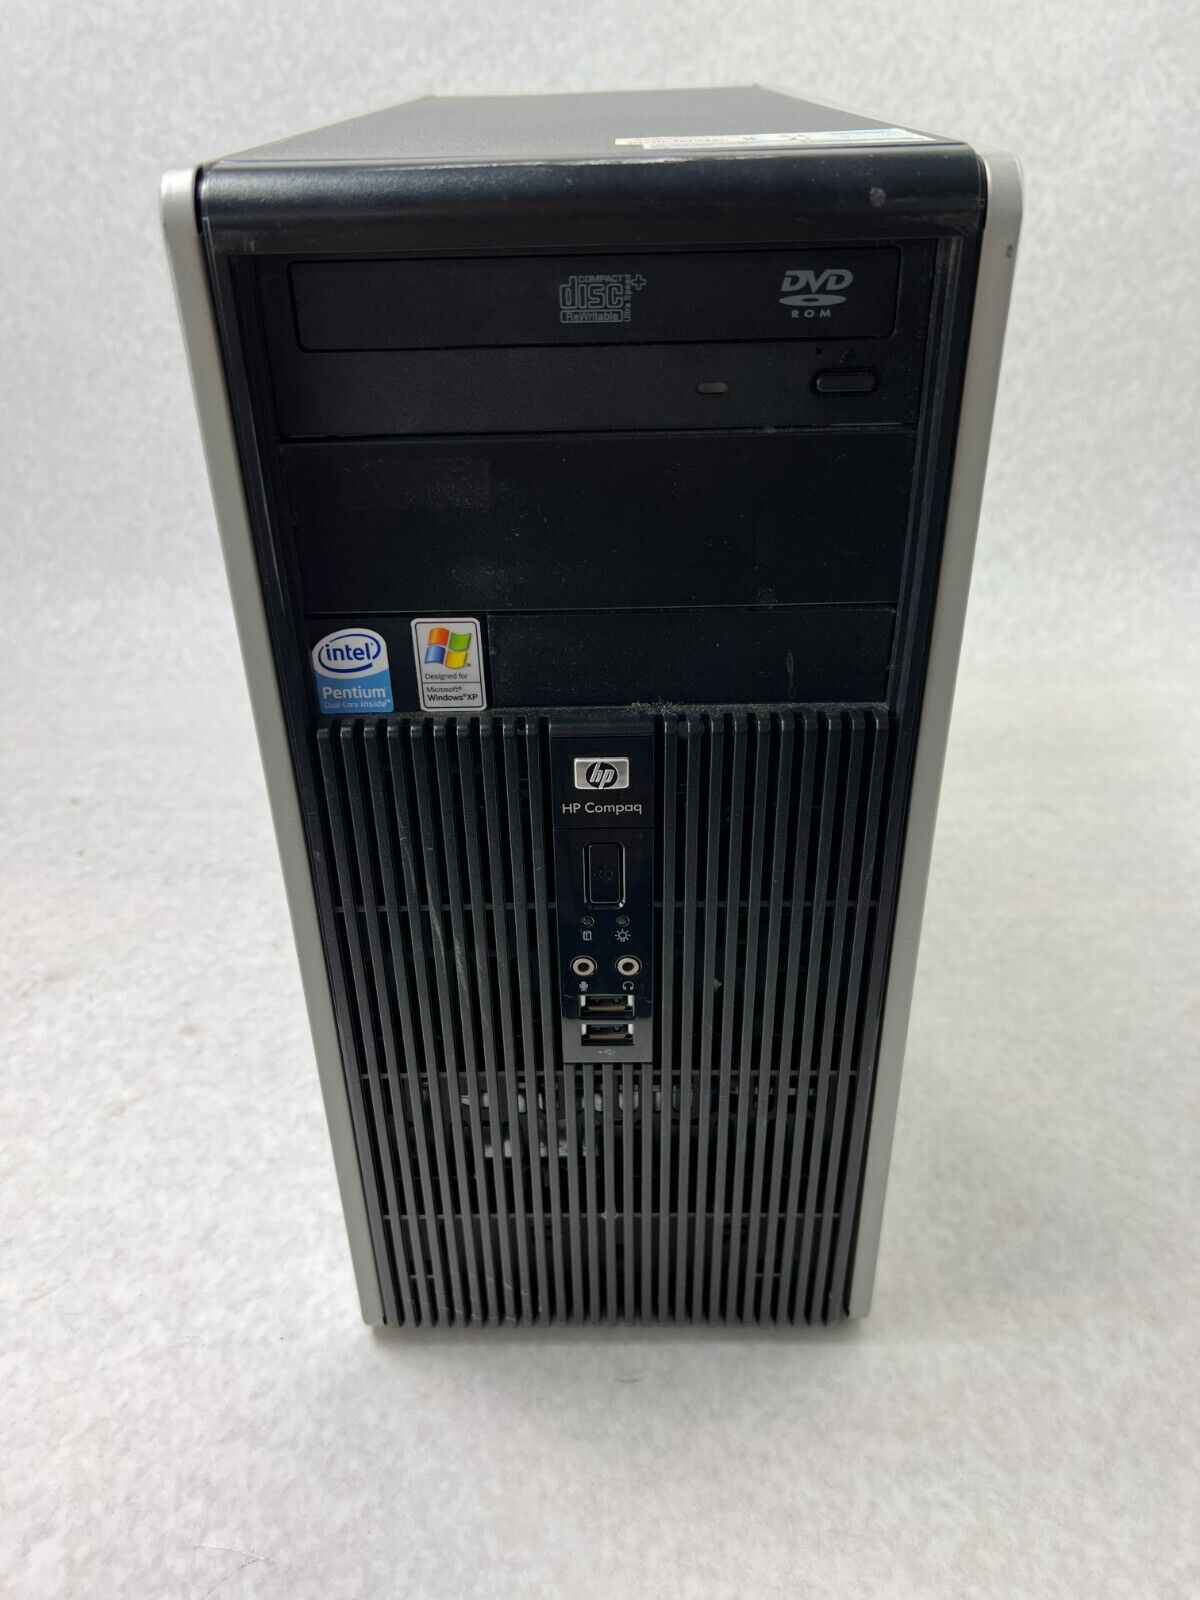 HP Compaq dc5700 MT Intel Pentium Dual Core-E2160 1.80GHz 1 GB RAM No HDD No OS